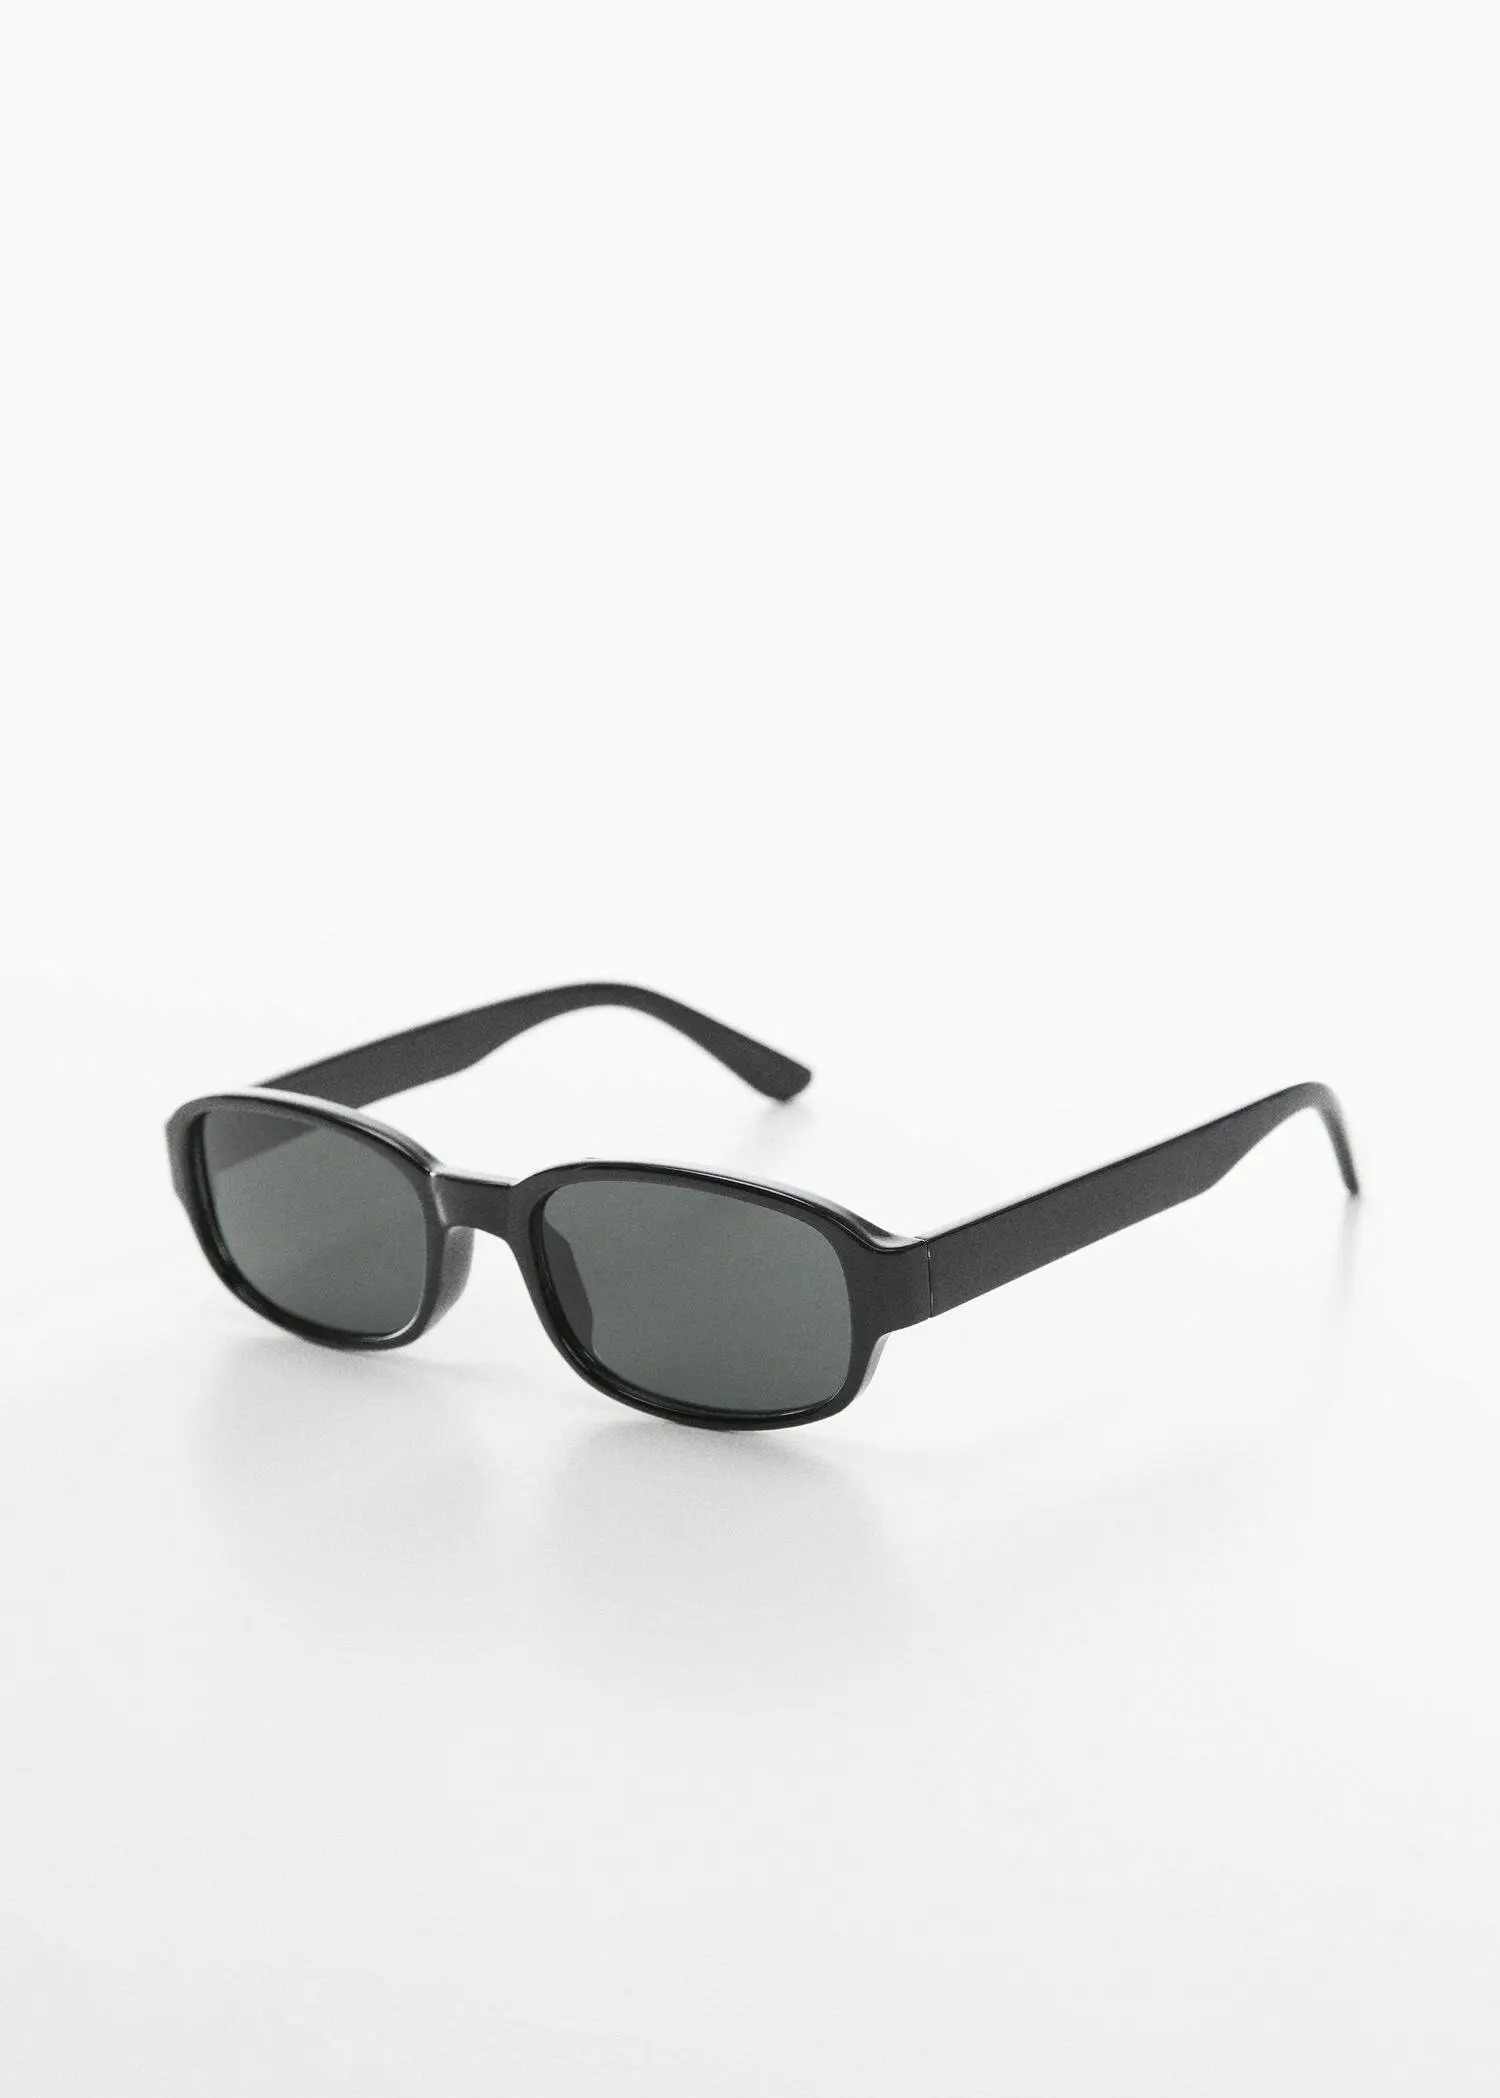 Mango Retro style sunglasses. a pair of black sunglasses on a white surface 